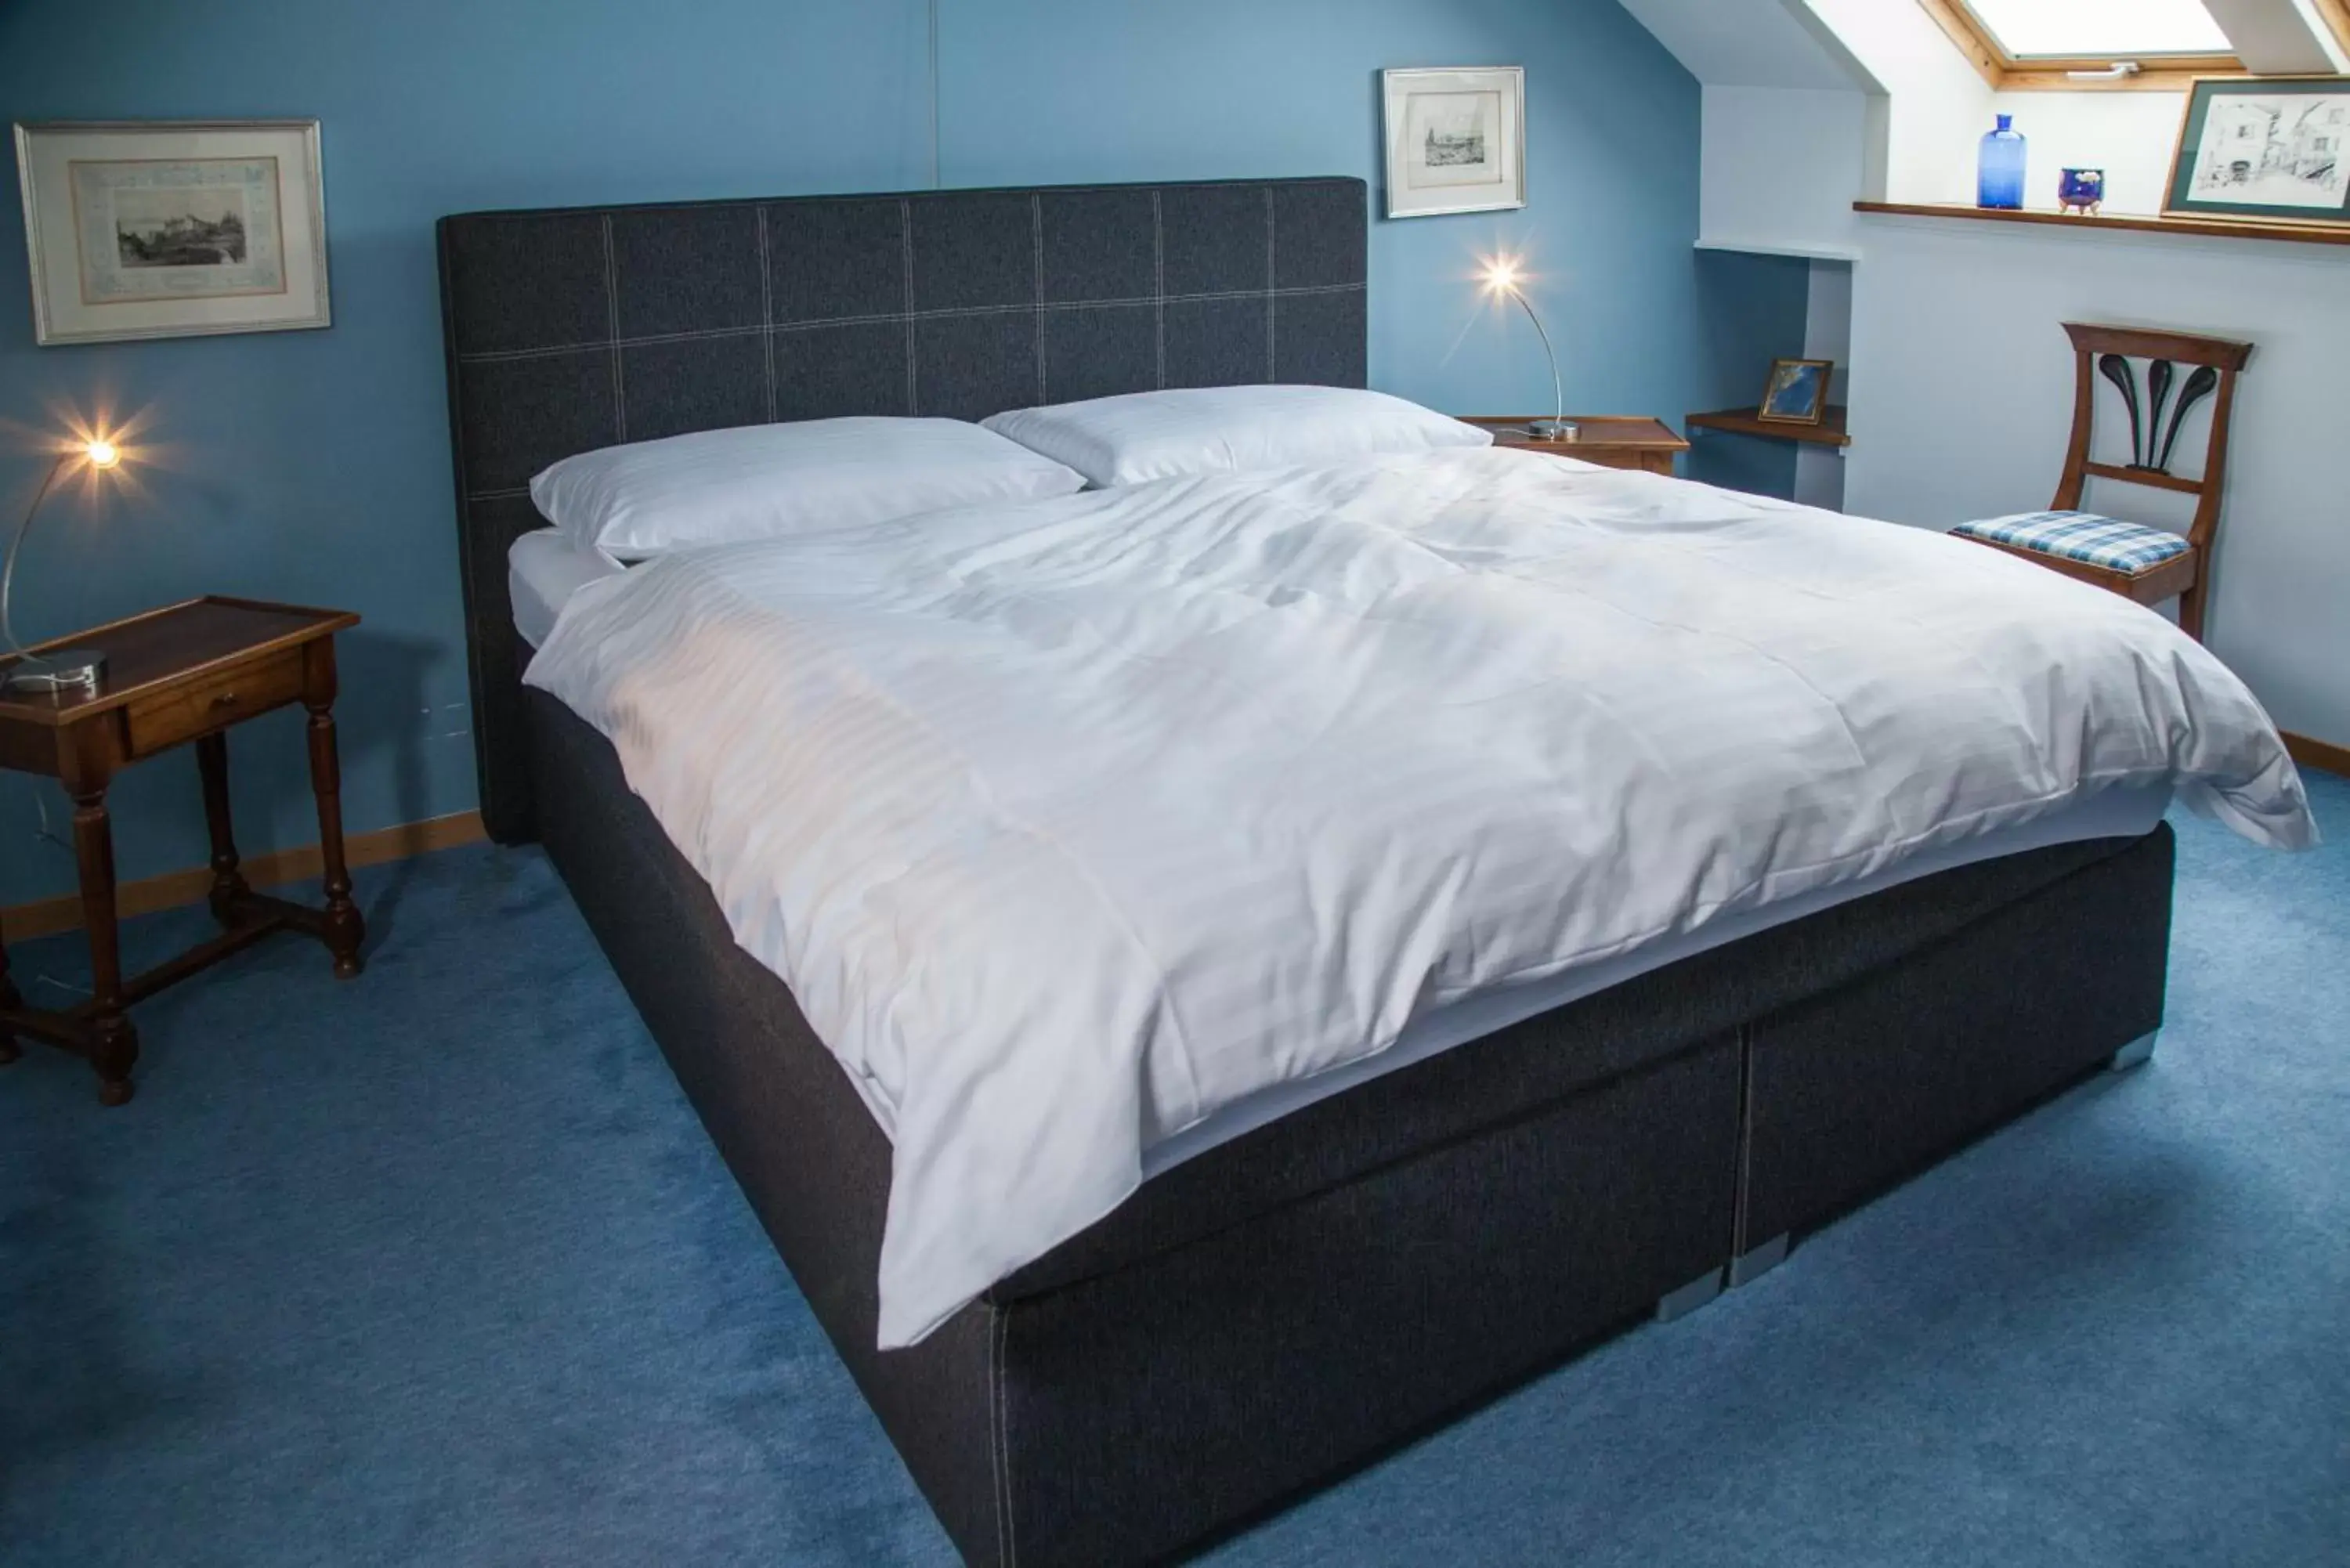 Bed, Room Photo in Hôtel Les Vieux Toits